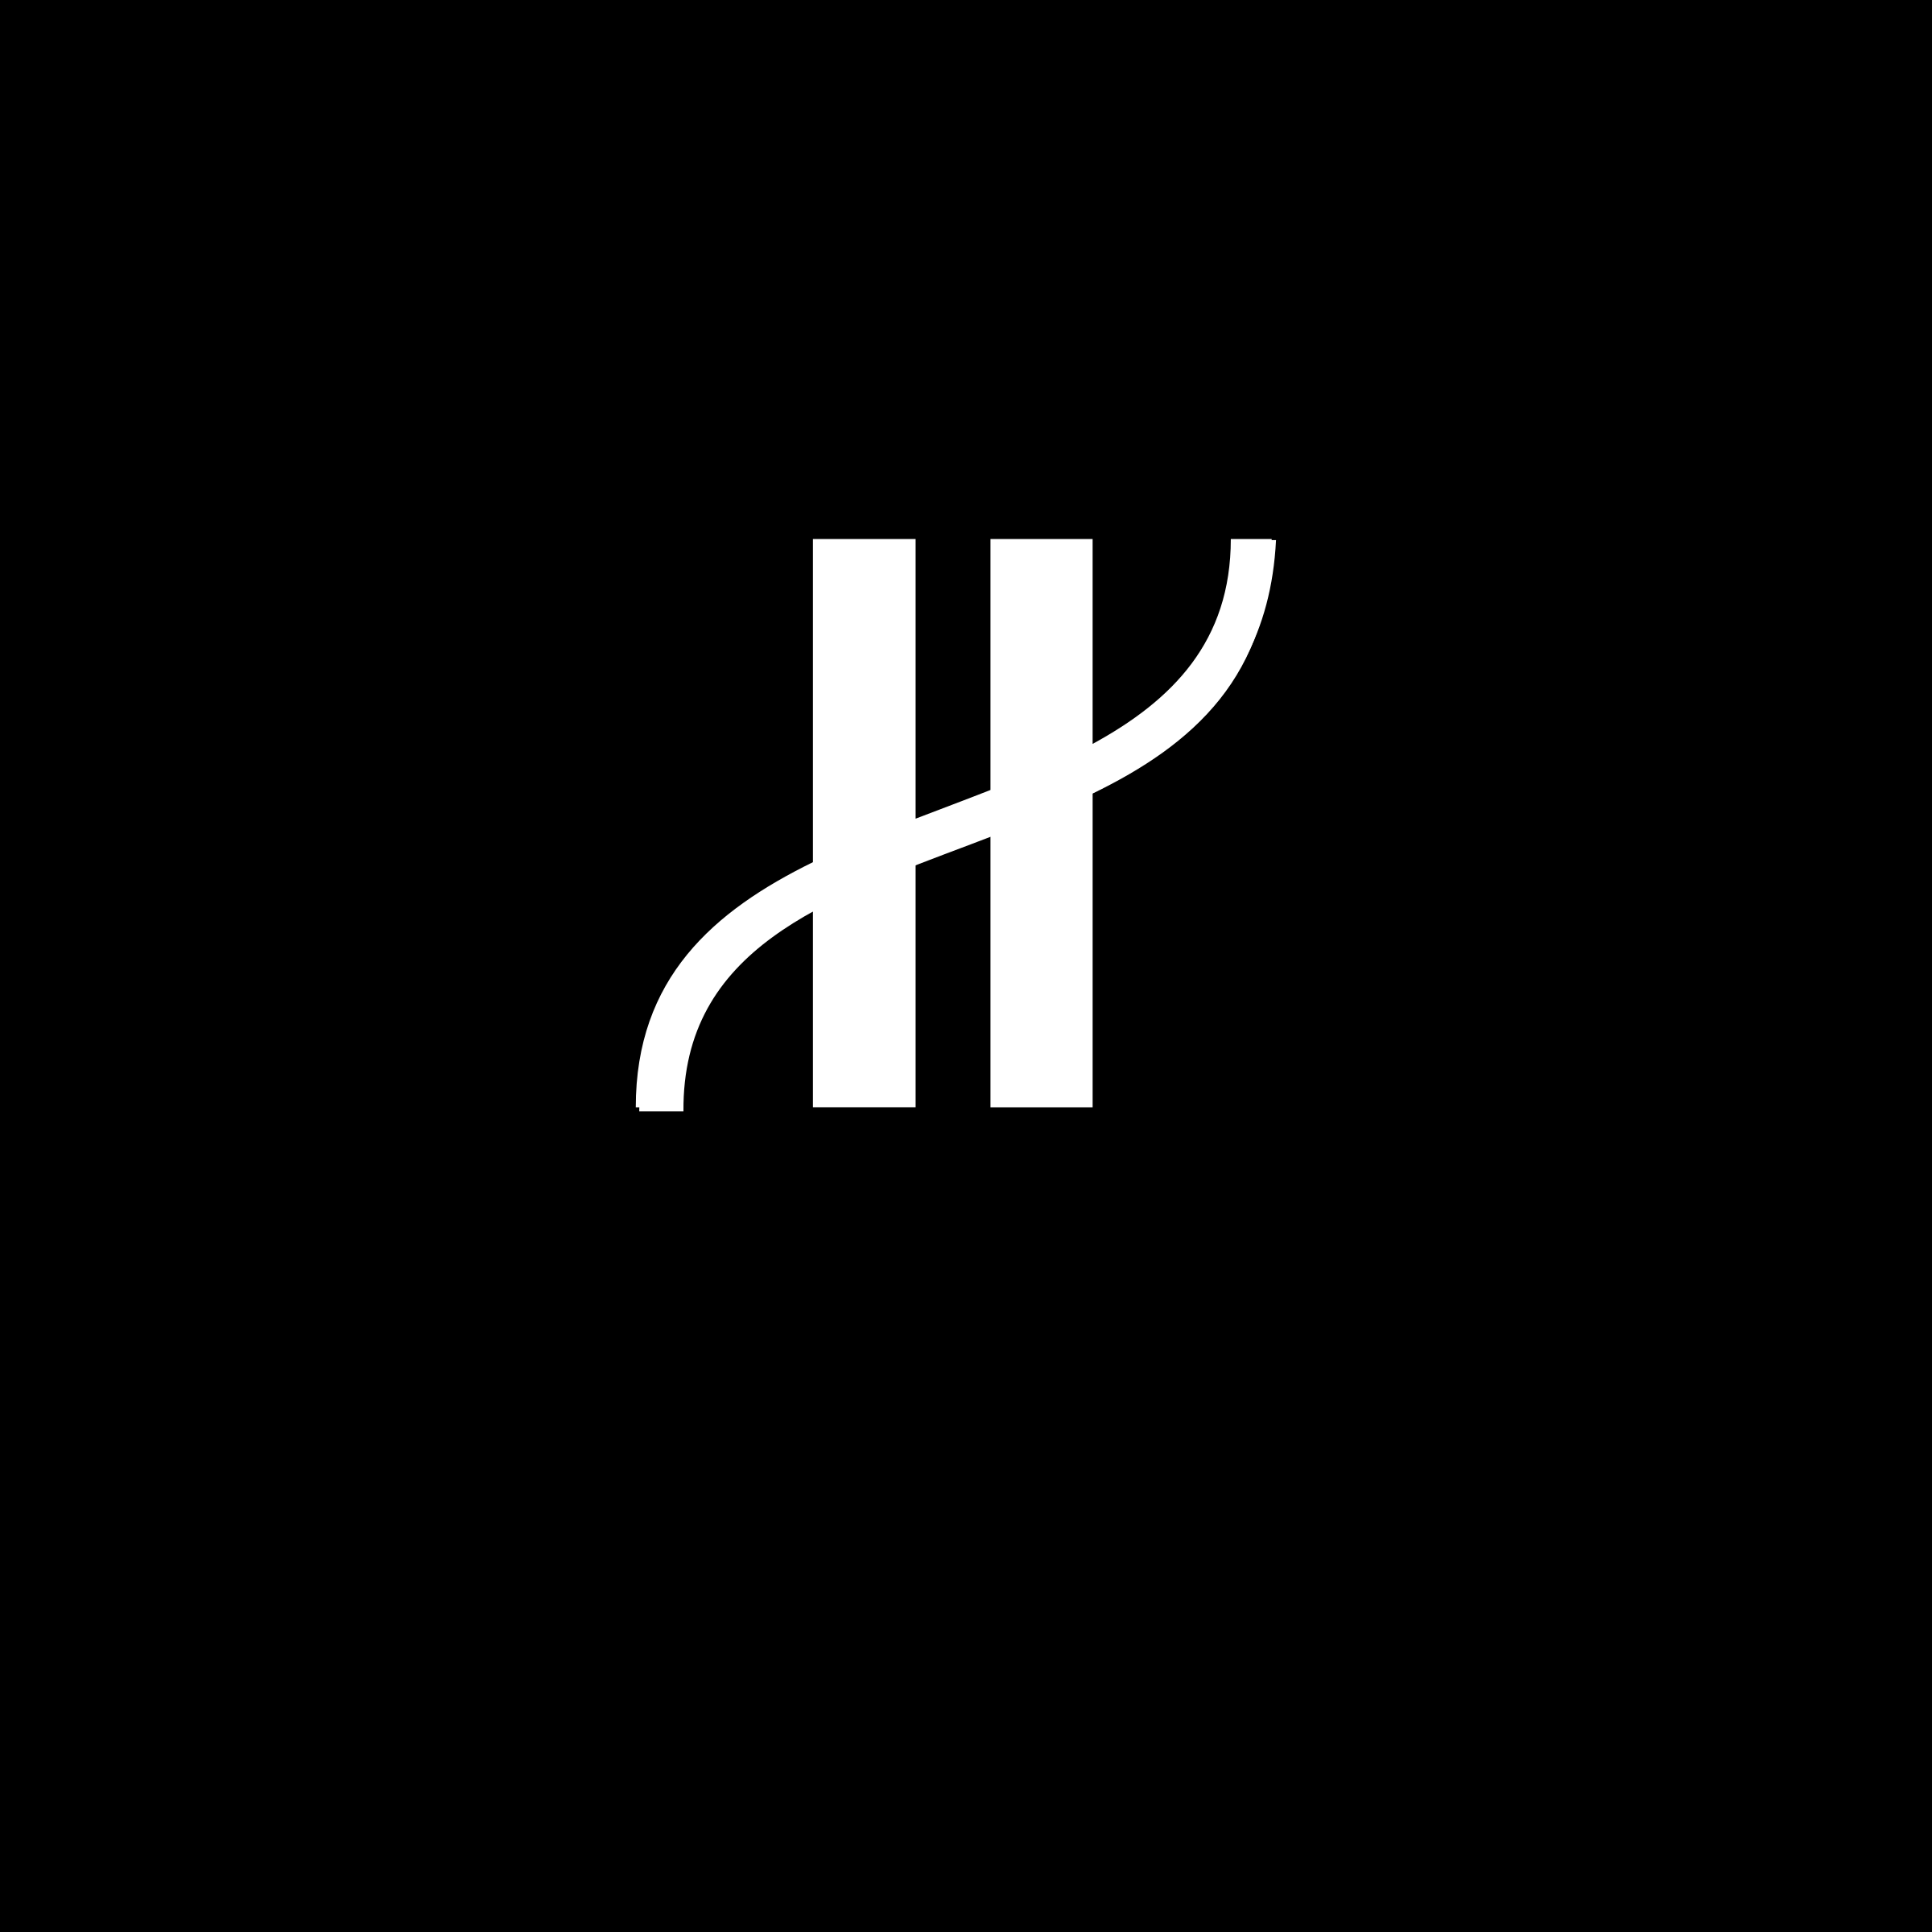 Hublot Logo - Hublot Logo PNG Transparent & SVG Vector - Freebie Supply